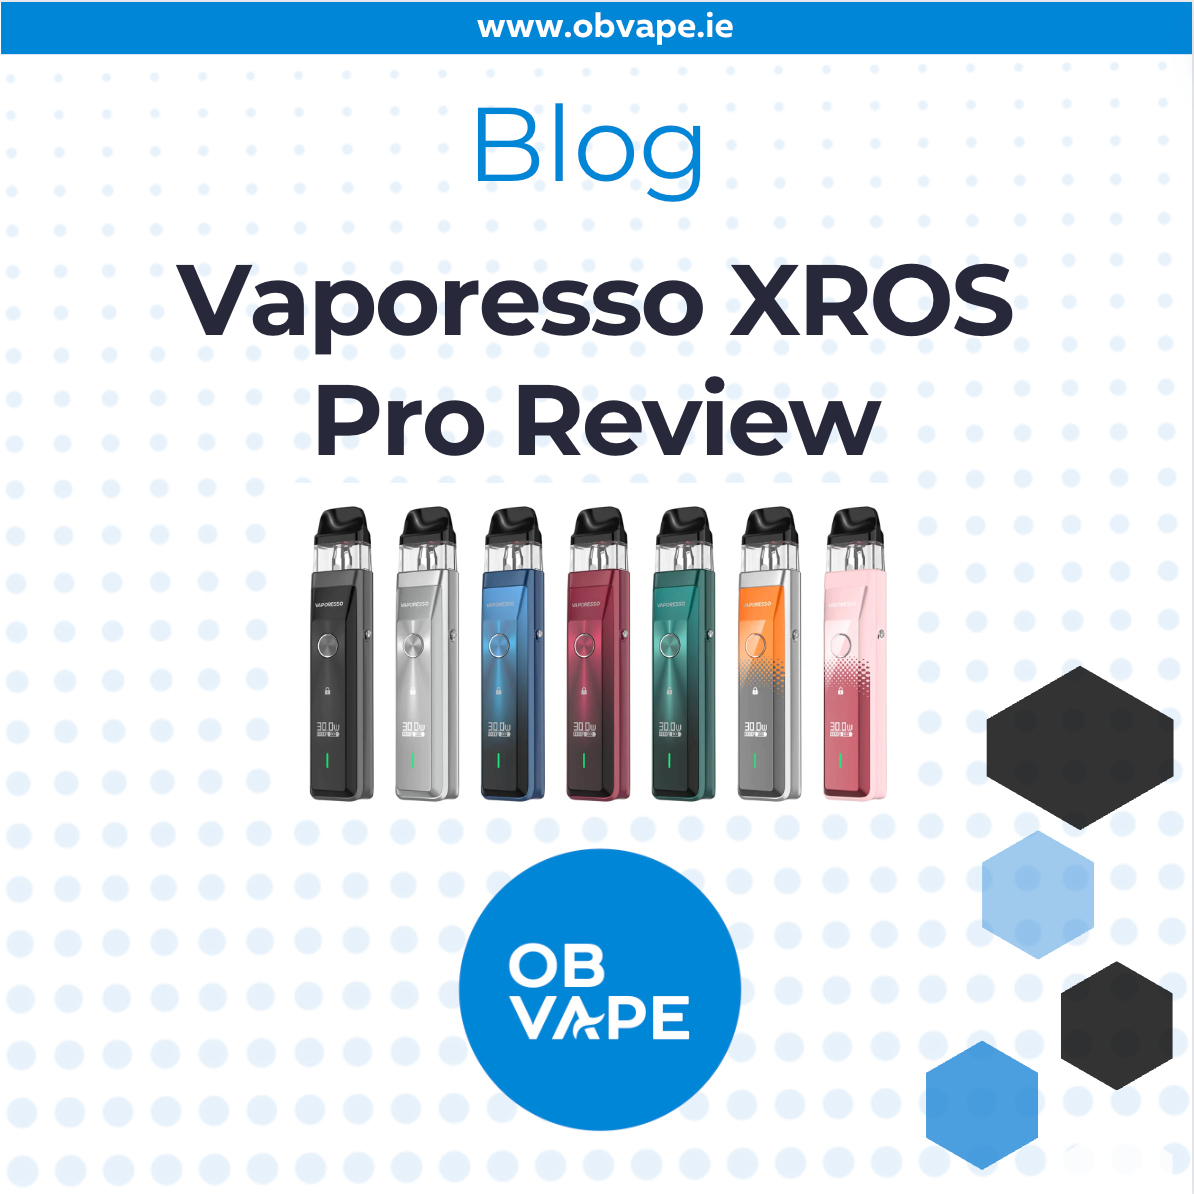 Vaporesso XROS Pro Review